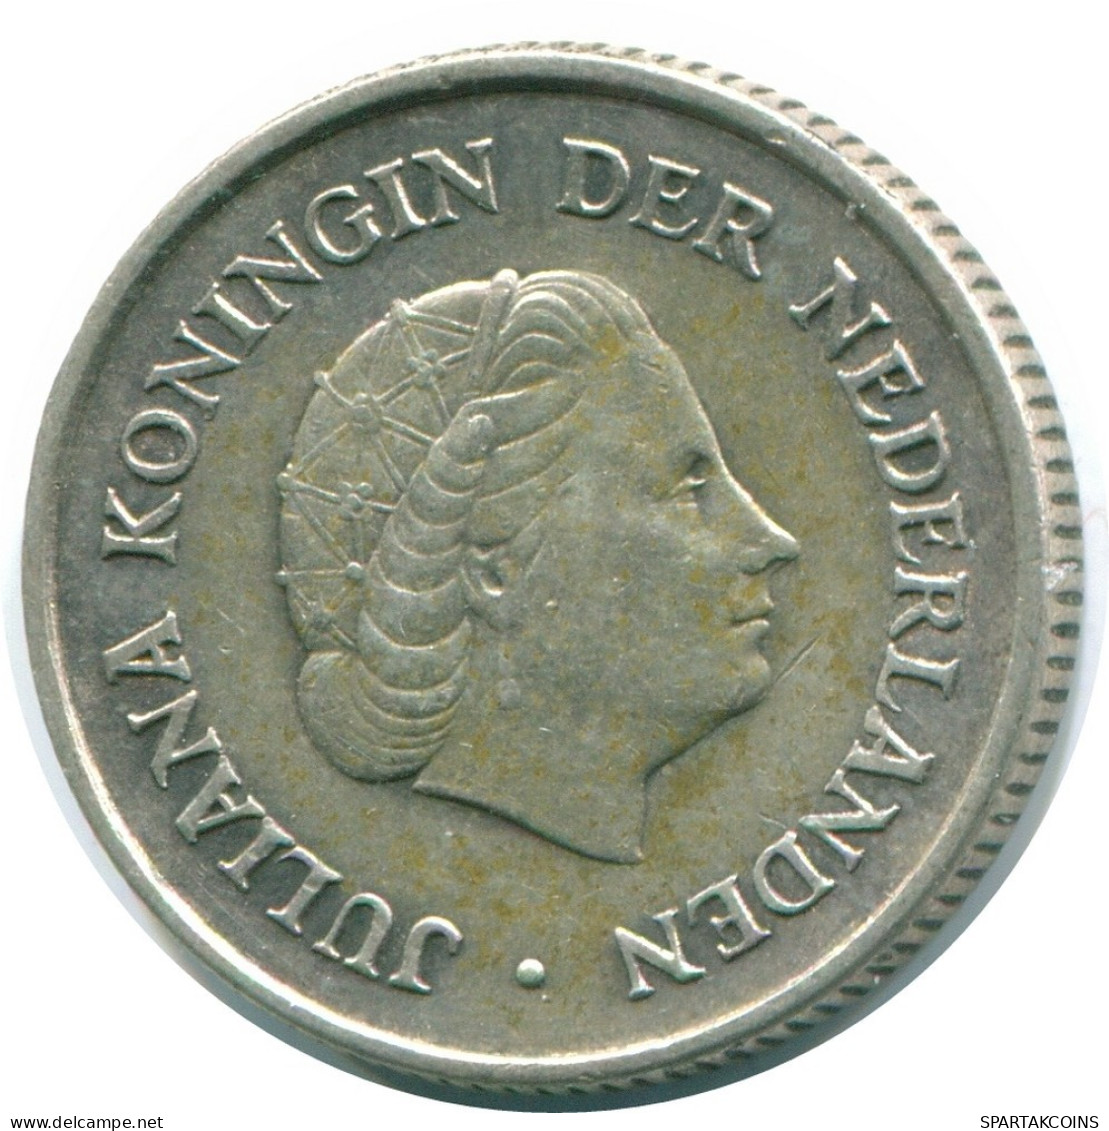 1/4 GULDEN 1970 NETHERLANDS ANTILLES SILVER Colonial Coin #NL11680.4.U.A - Niederländische Antillen